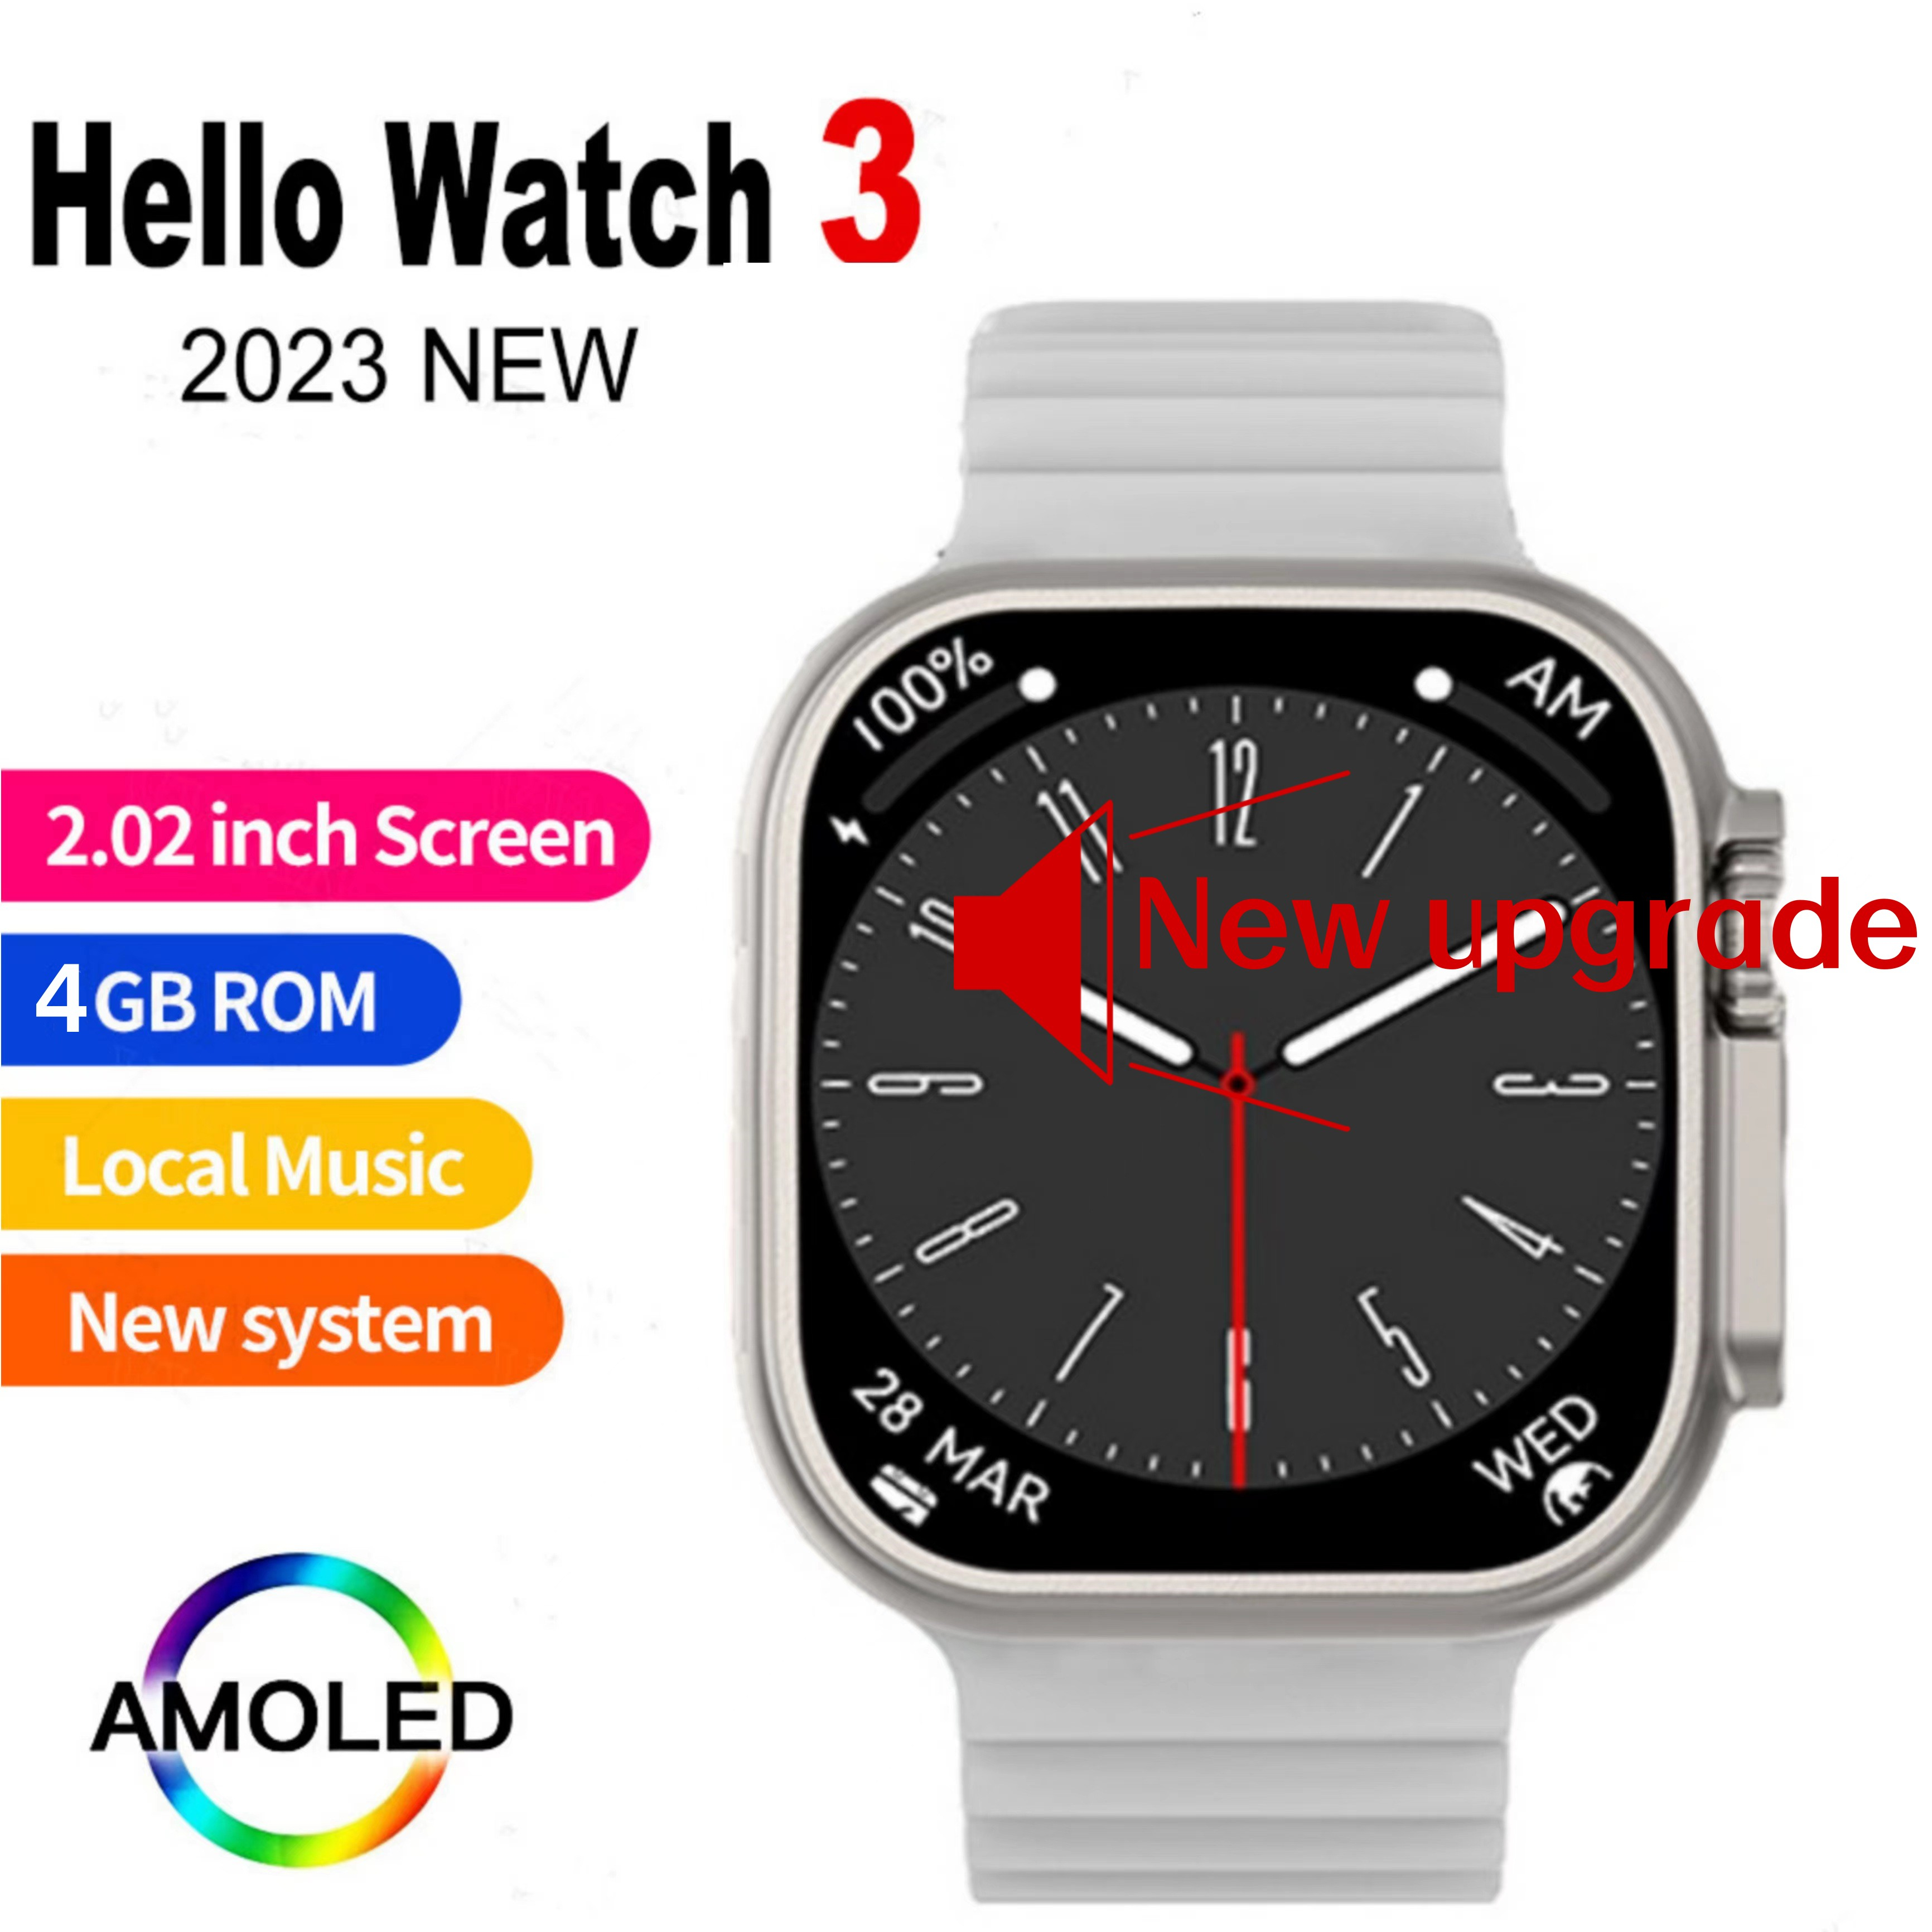 Hello Watch 3 Amoled 4 GB